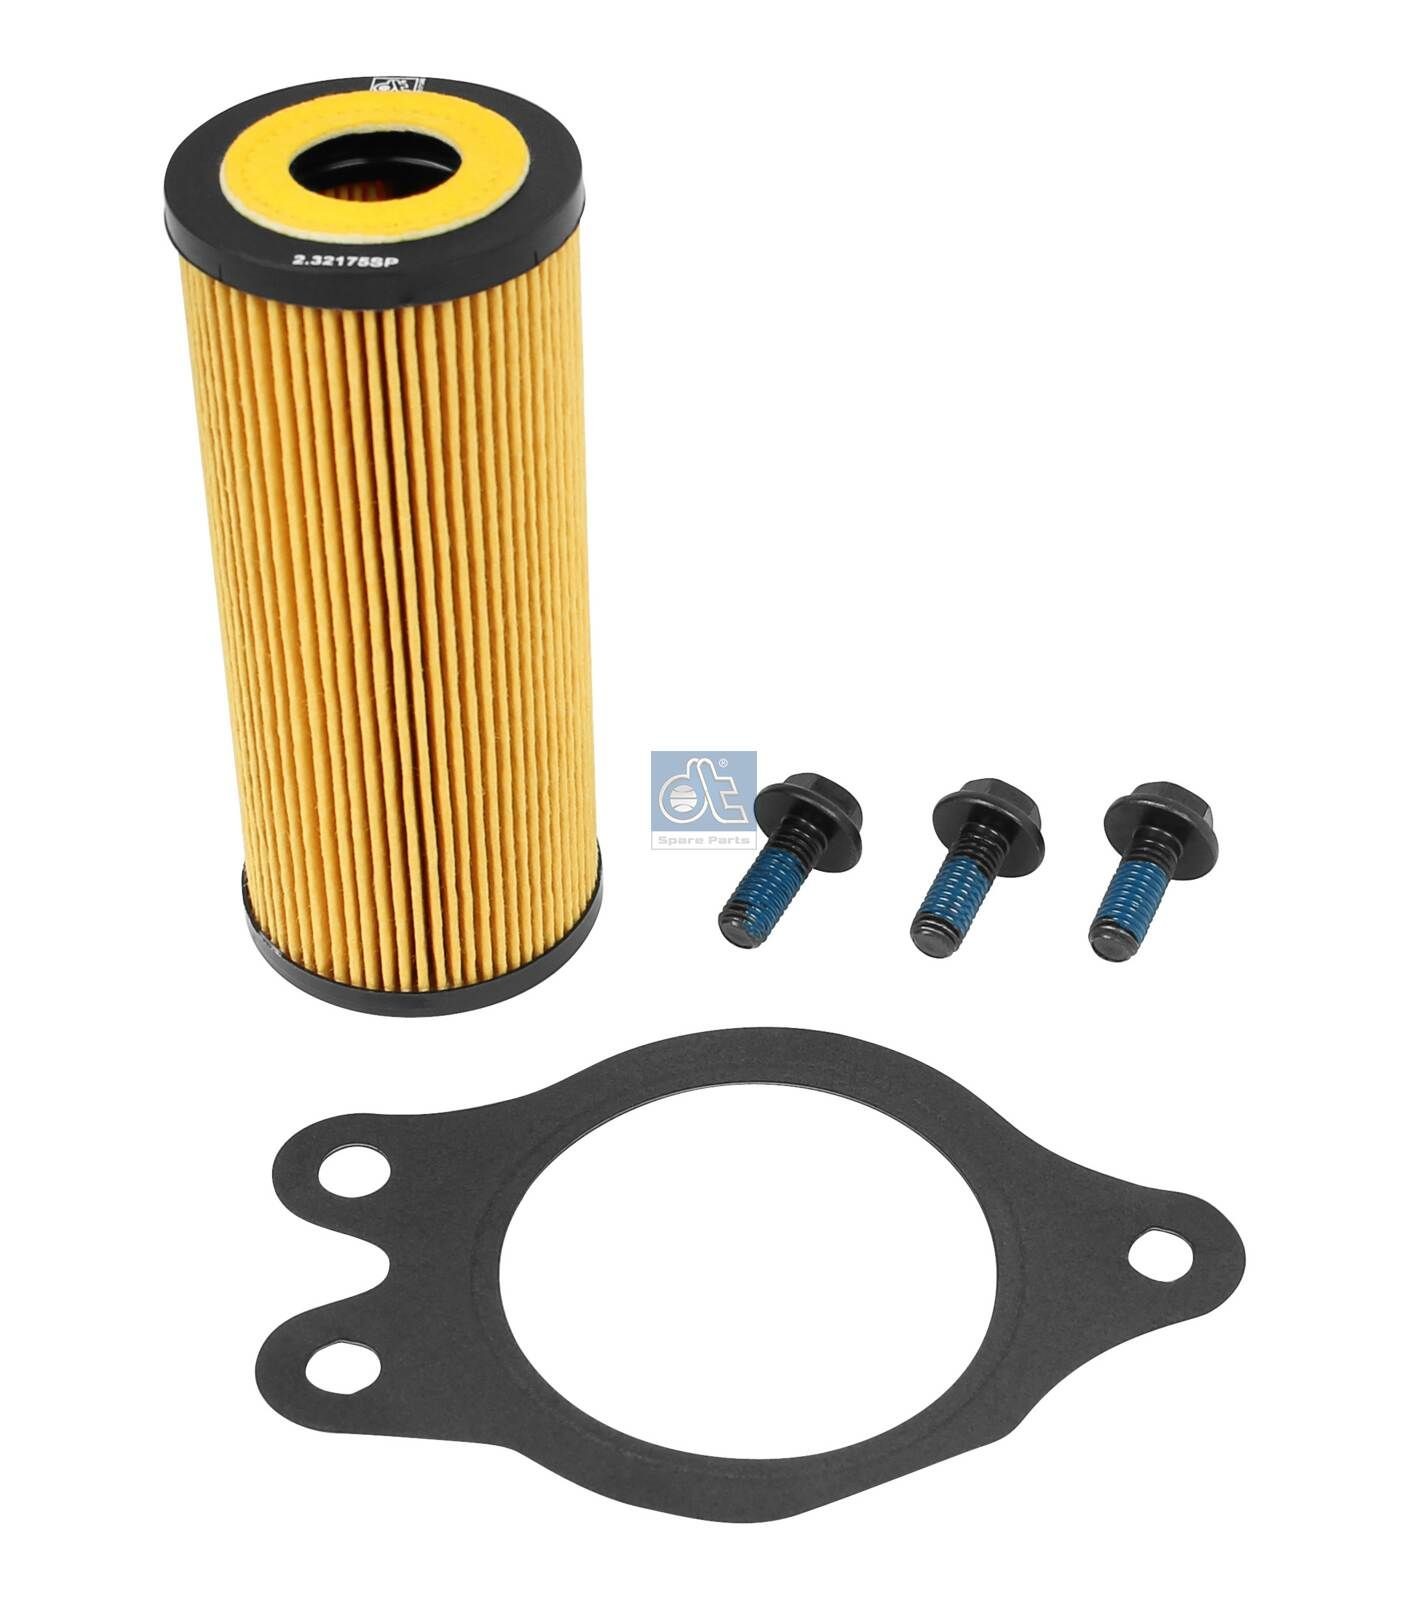 HU 721 x DT Spare Parts 2.32174SP Oil filter 85104076